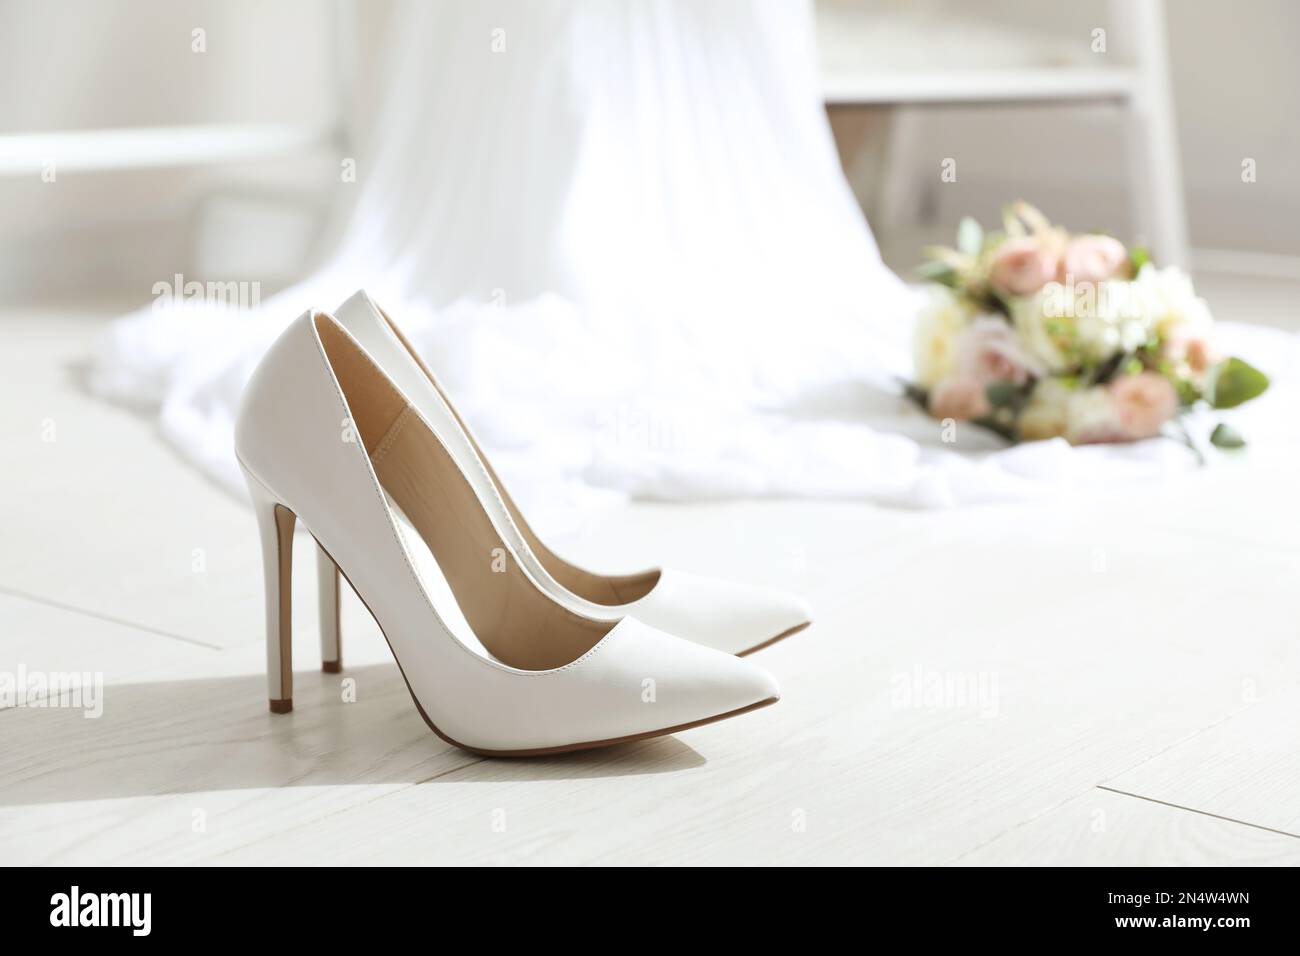 Pair of wedding high heel shoes on white wooden floor indoors Stock Photo